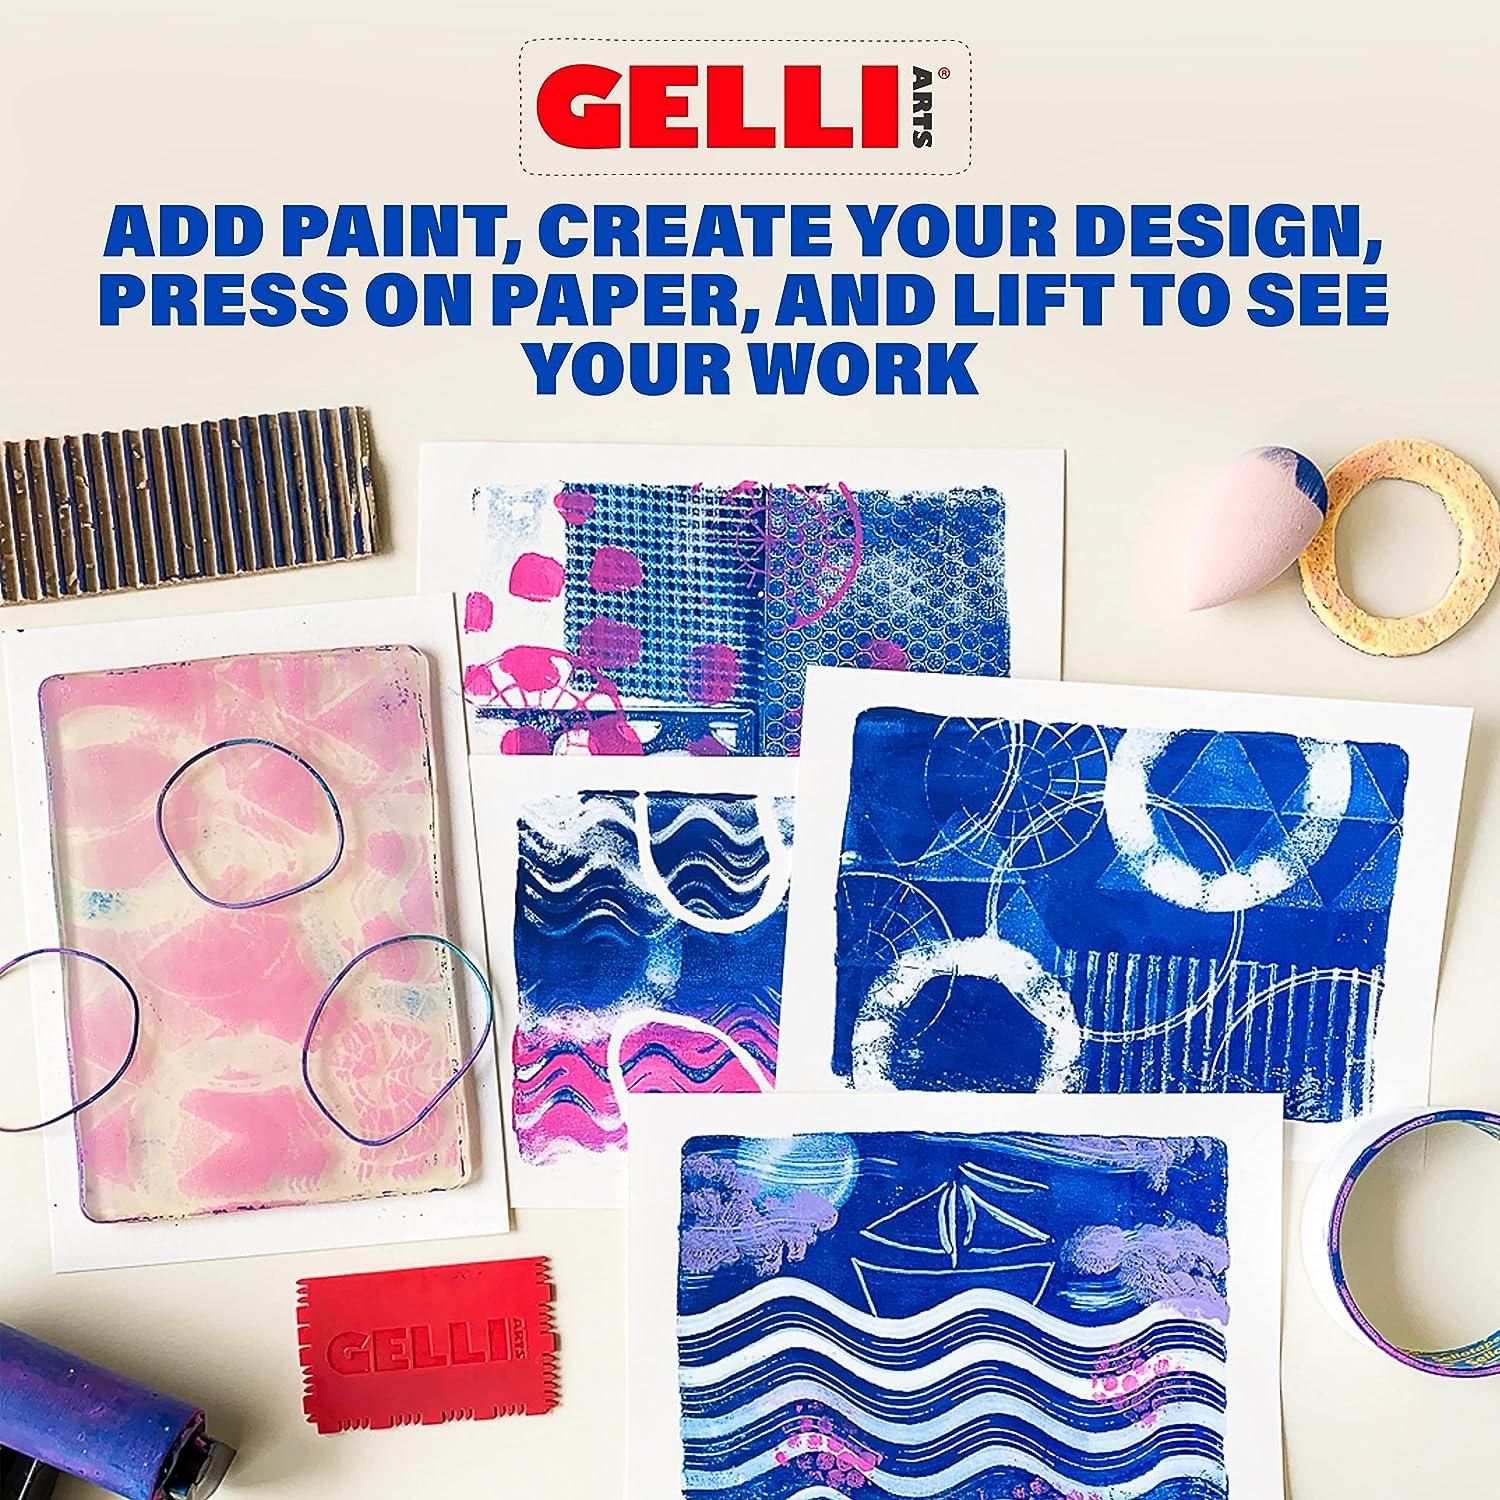 Gelli Plate Printingart classes for kids